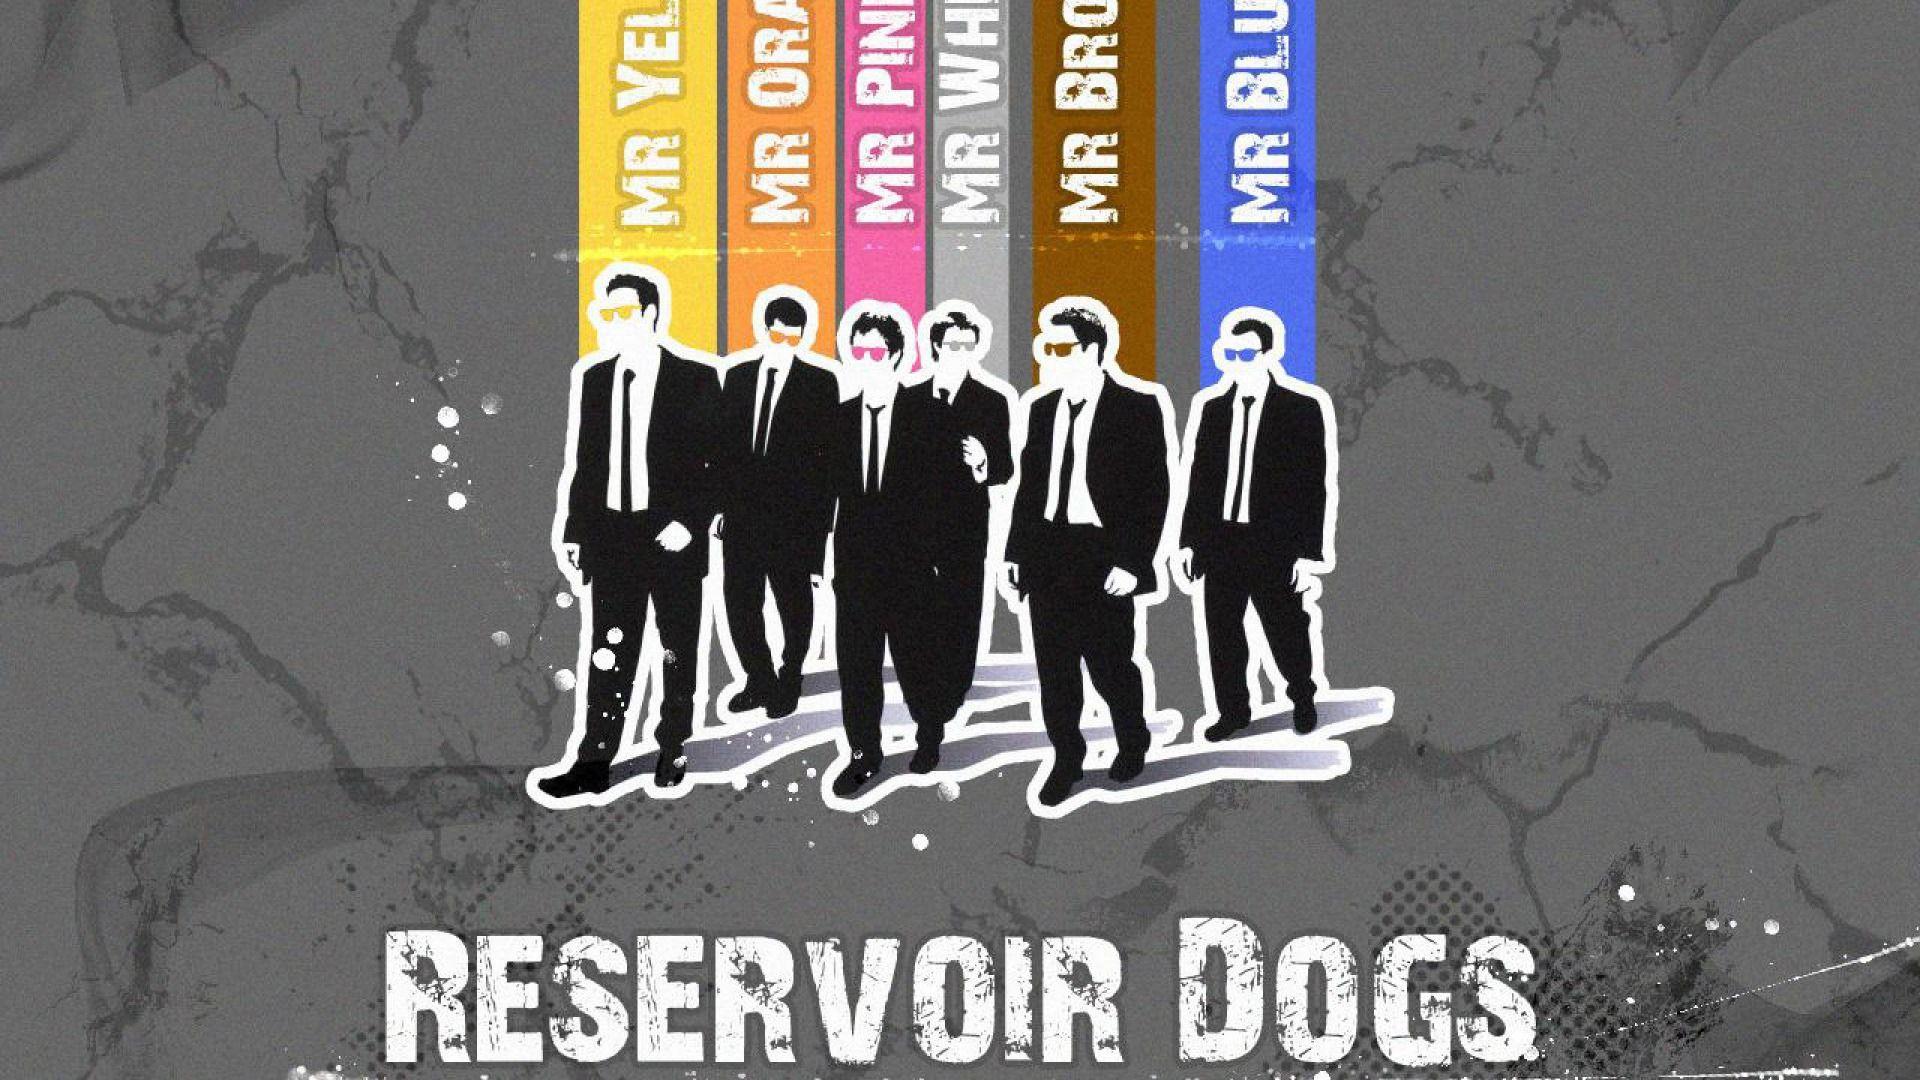 Reservoir Dogs 1920 x 1080 Wallpapers